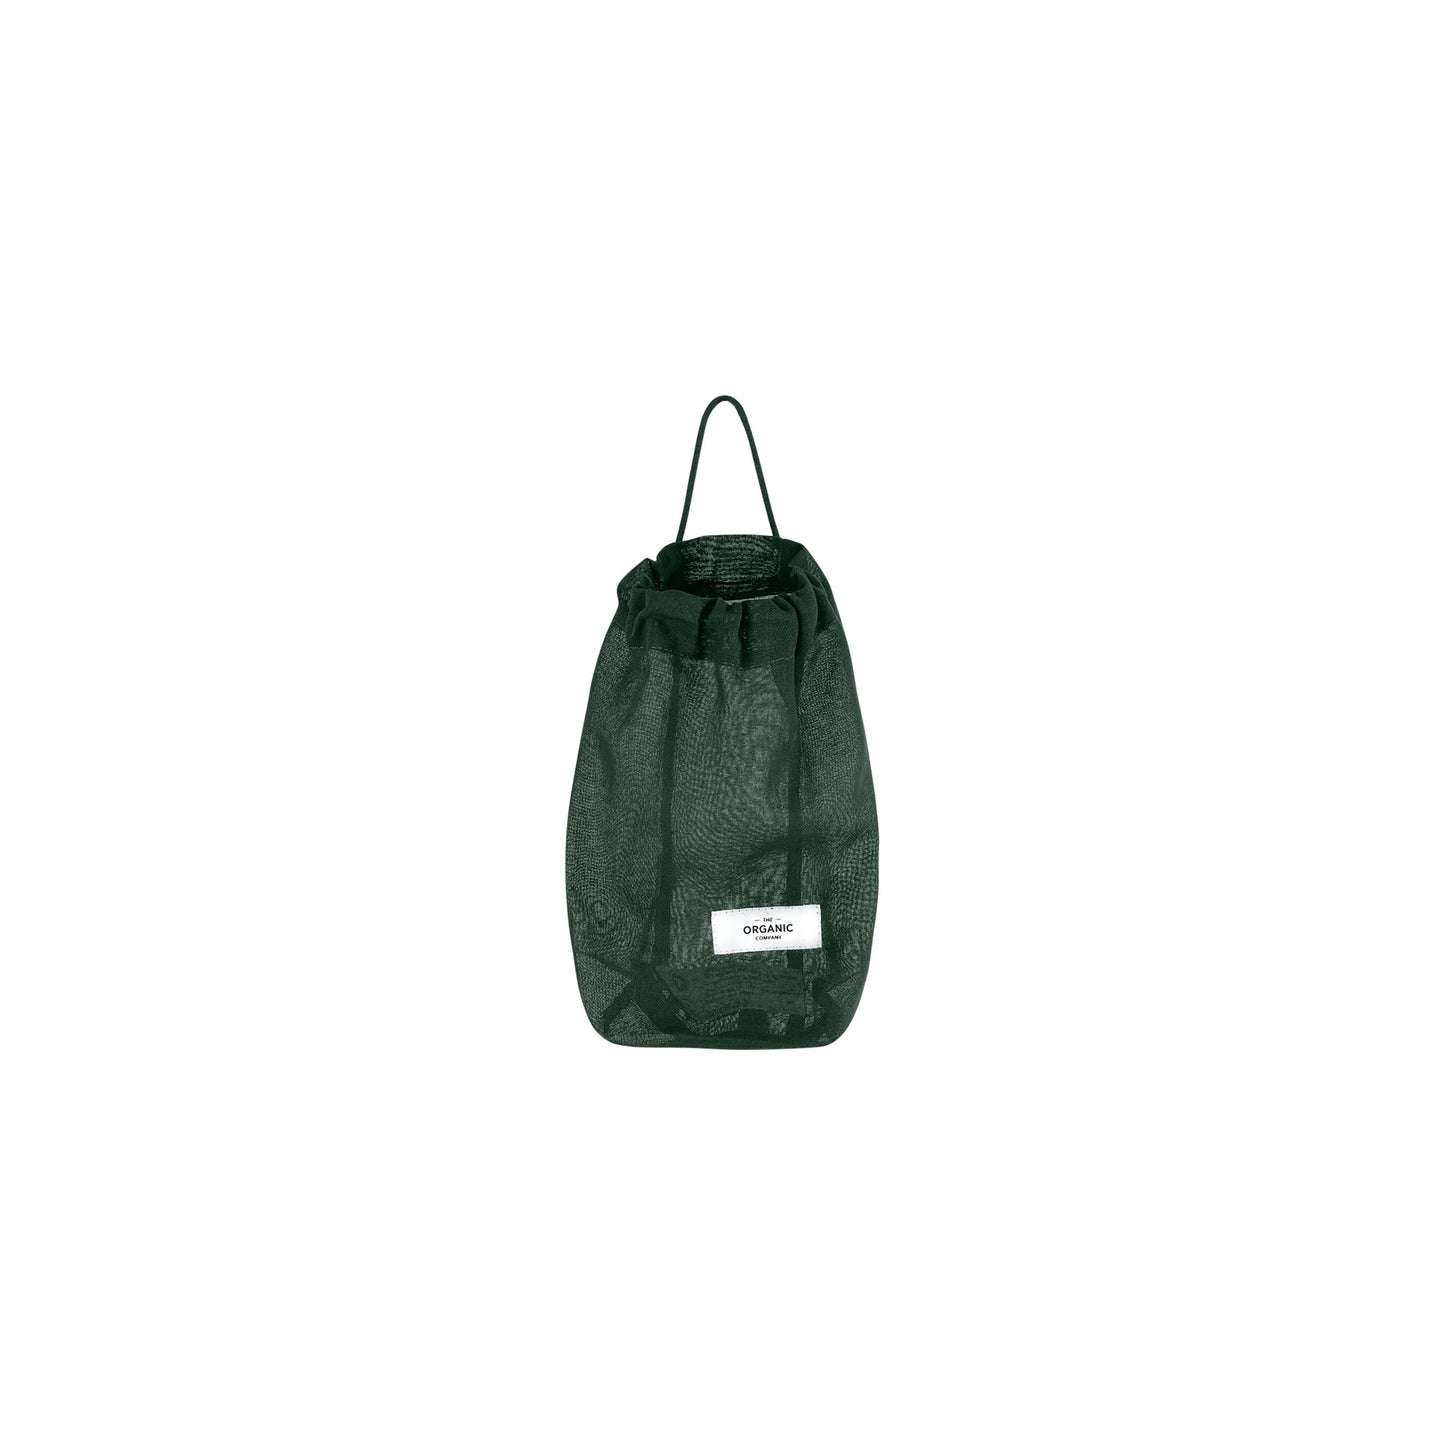 Food Bag Small - Dark Green